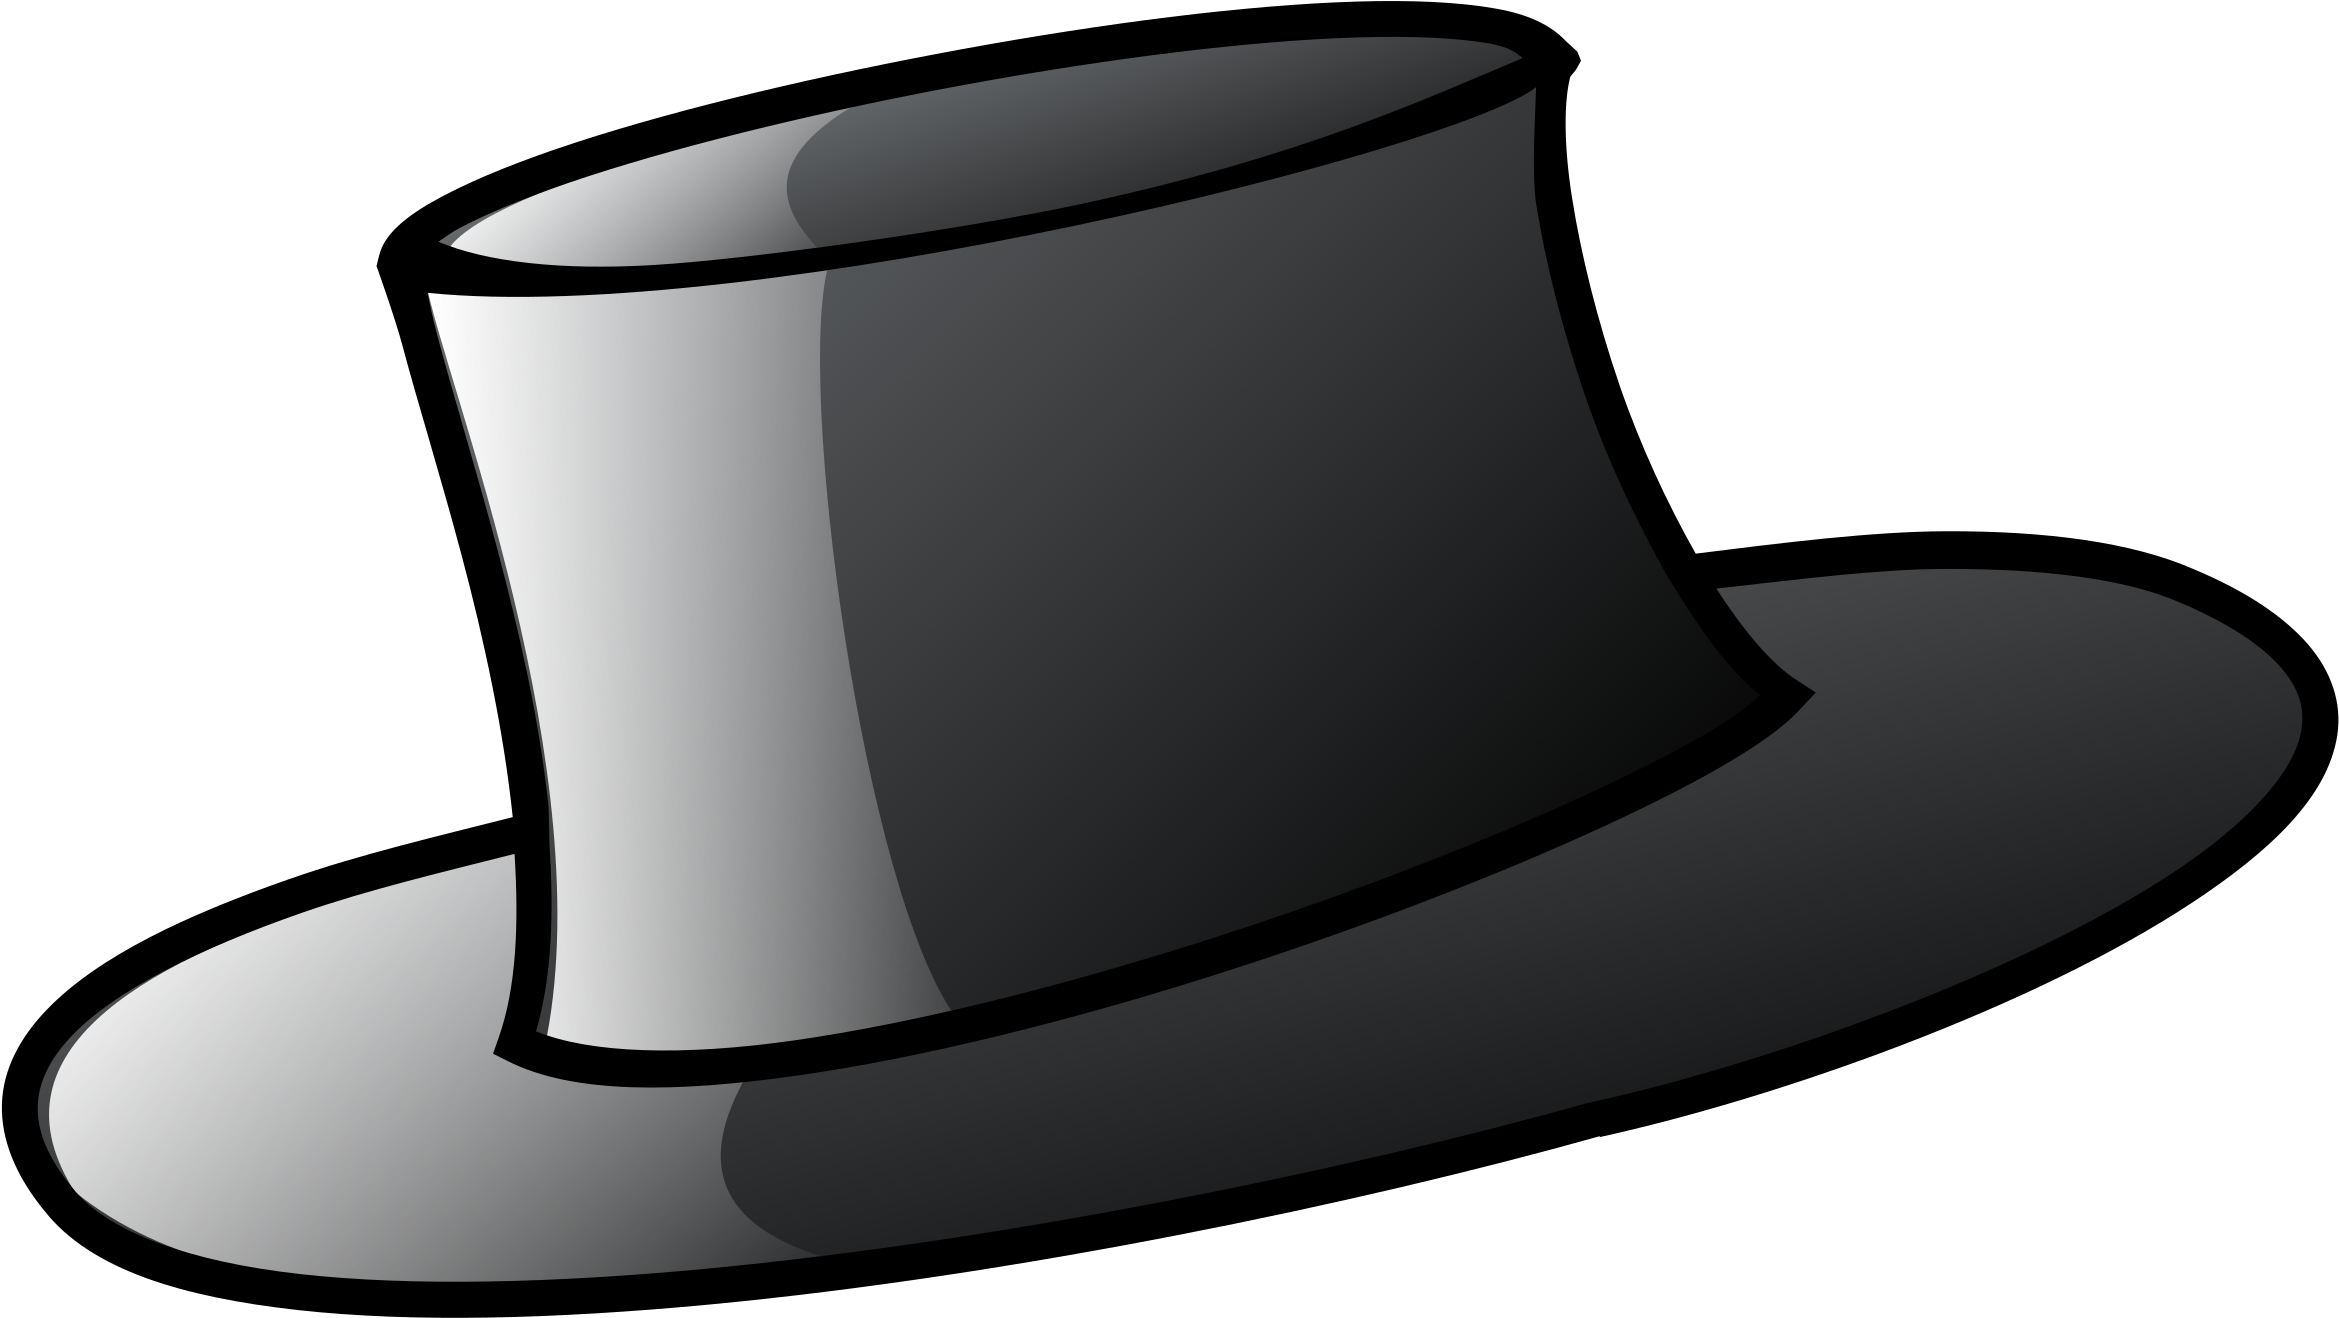 Hat Free Stock Photo Illustration Of A Black Cartoon - Small Hat Clip Art (2400x2400)